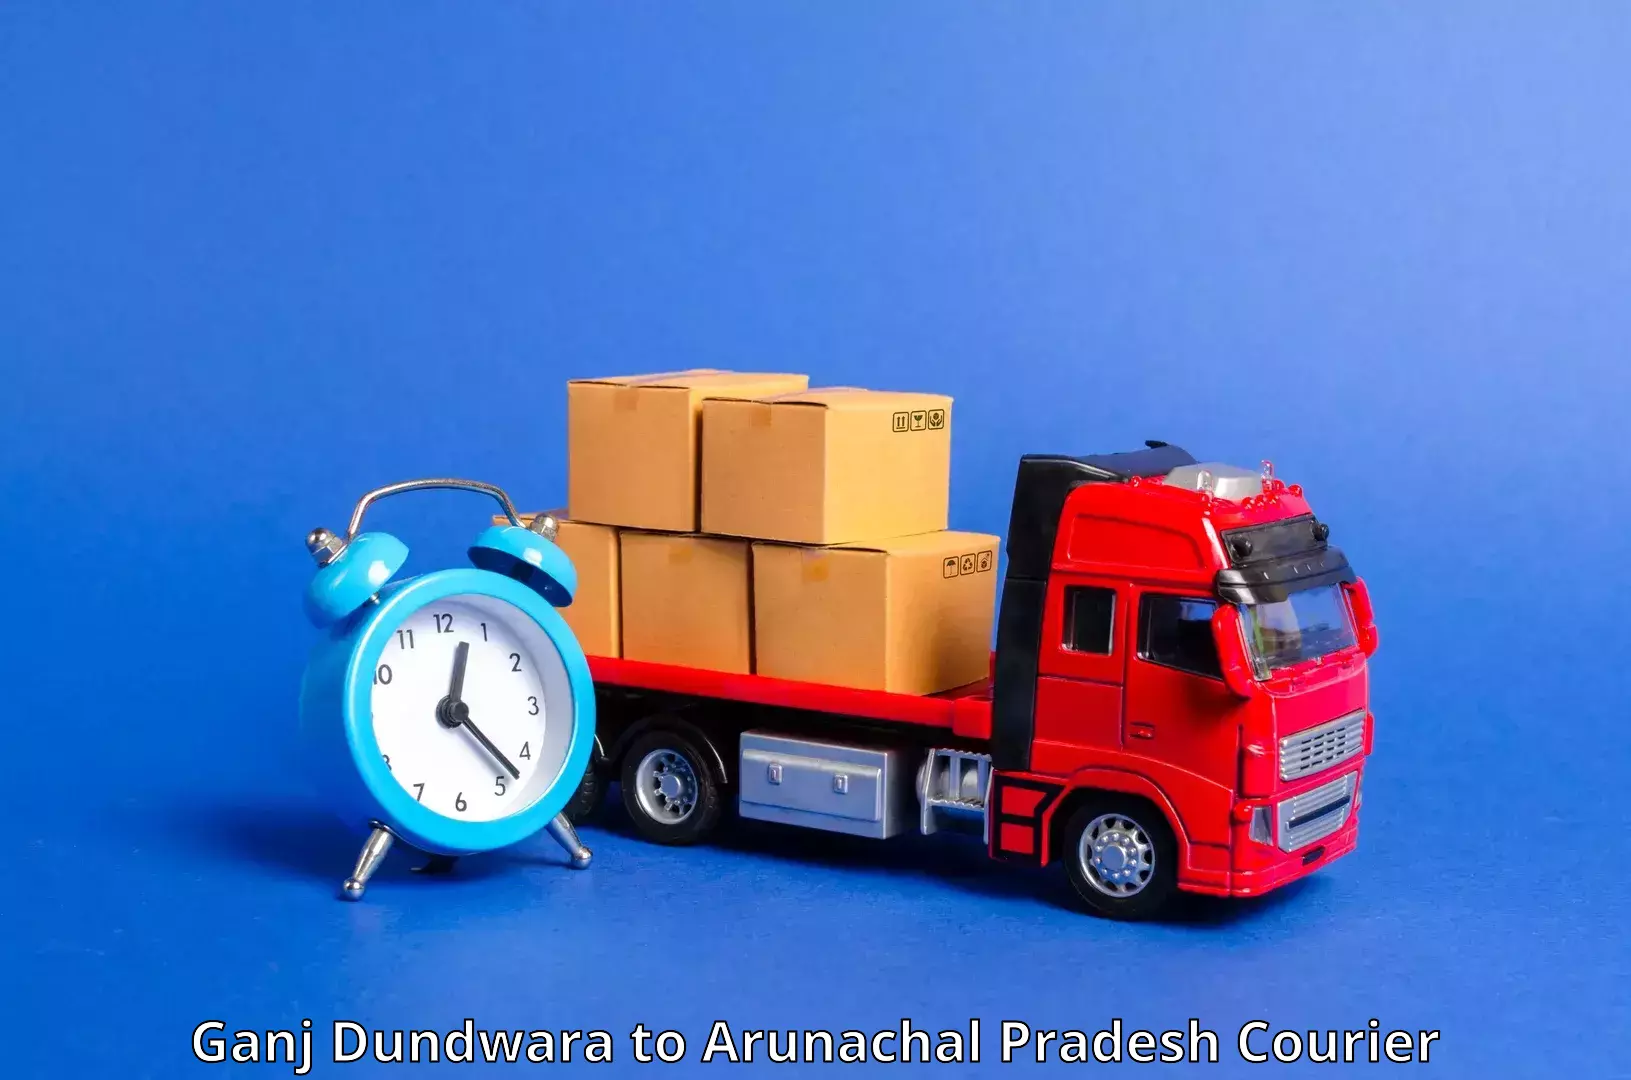 Professional parcel services in Ganj Dundwara to Arunachal Pradesh